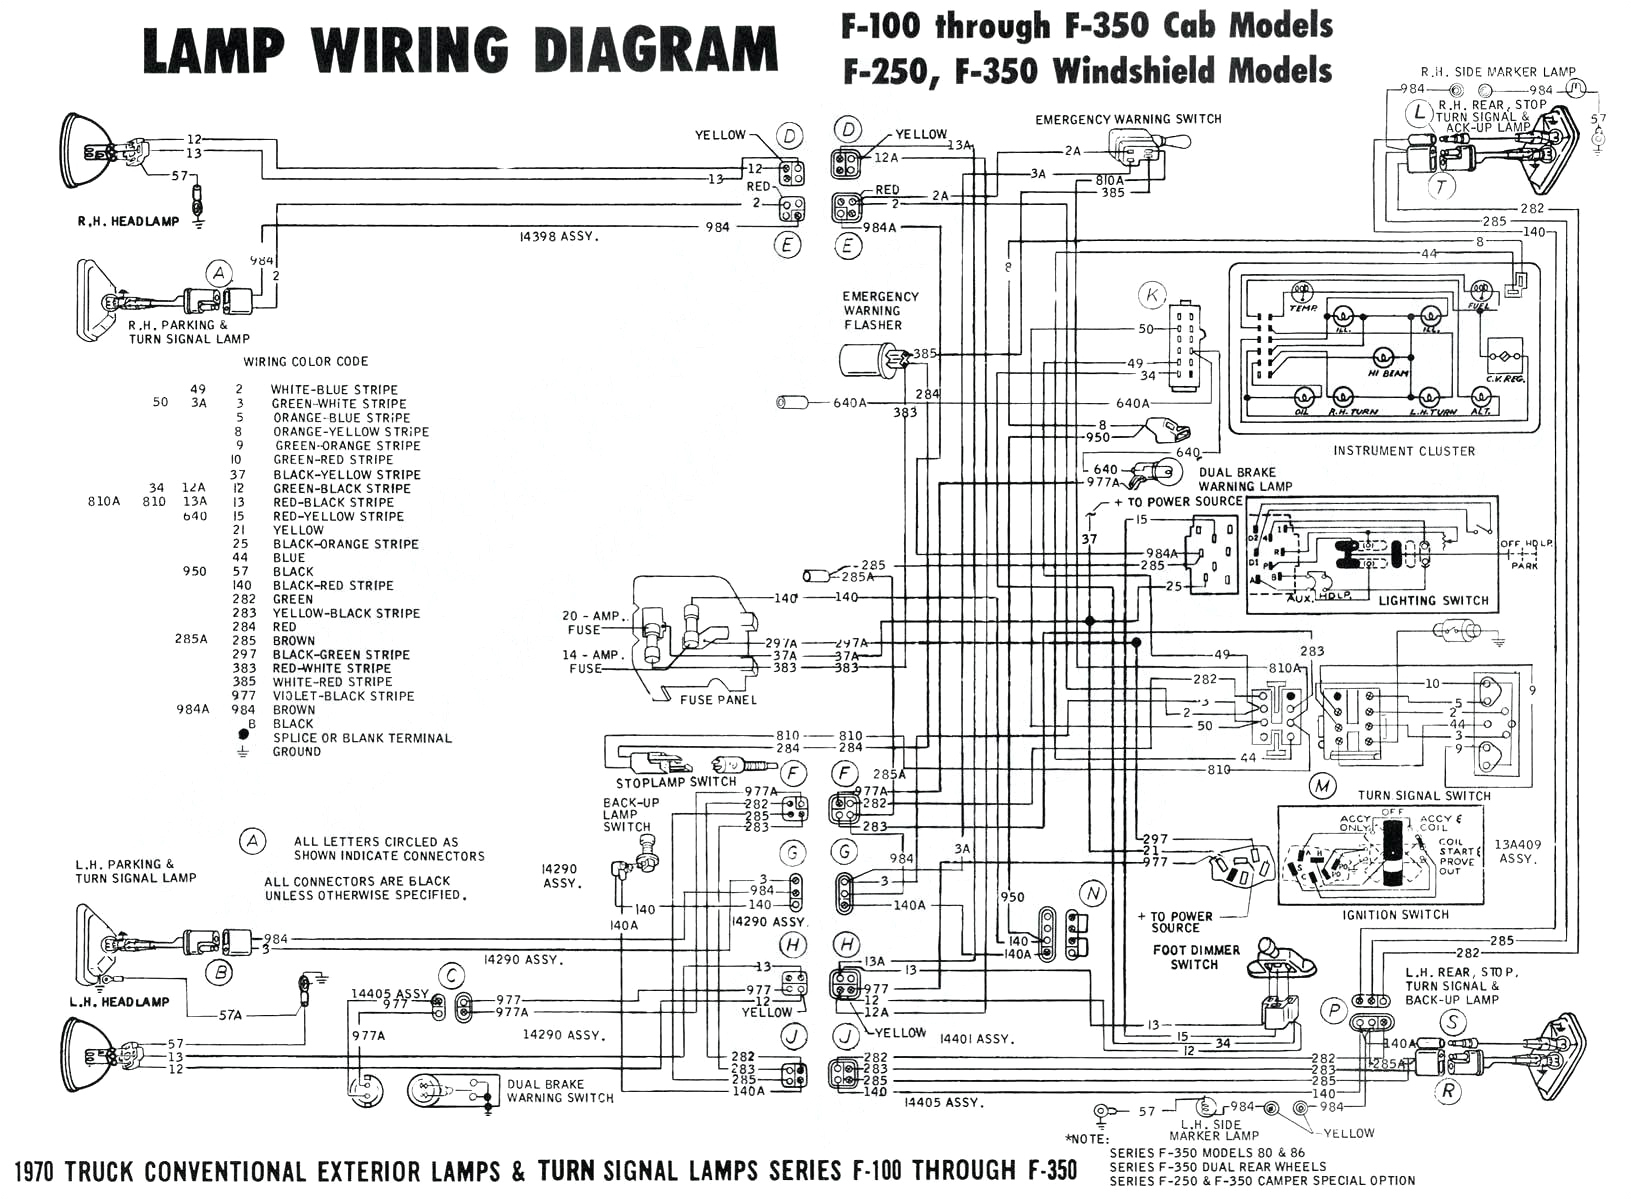 chaparral wiring diagram wiring diagram name 1999 chaparral wiring diagram aerolite rv wiring diagram wiring diagram